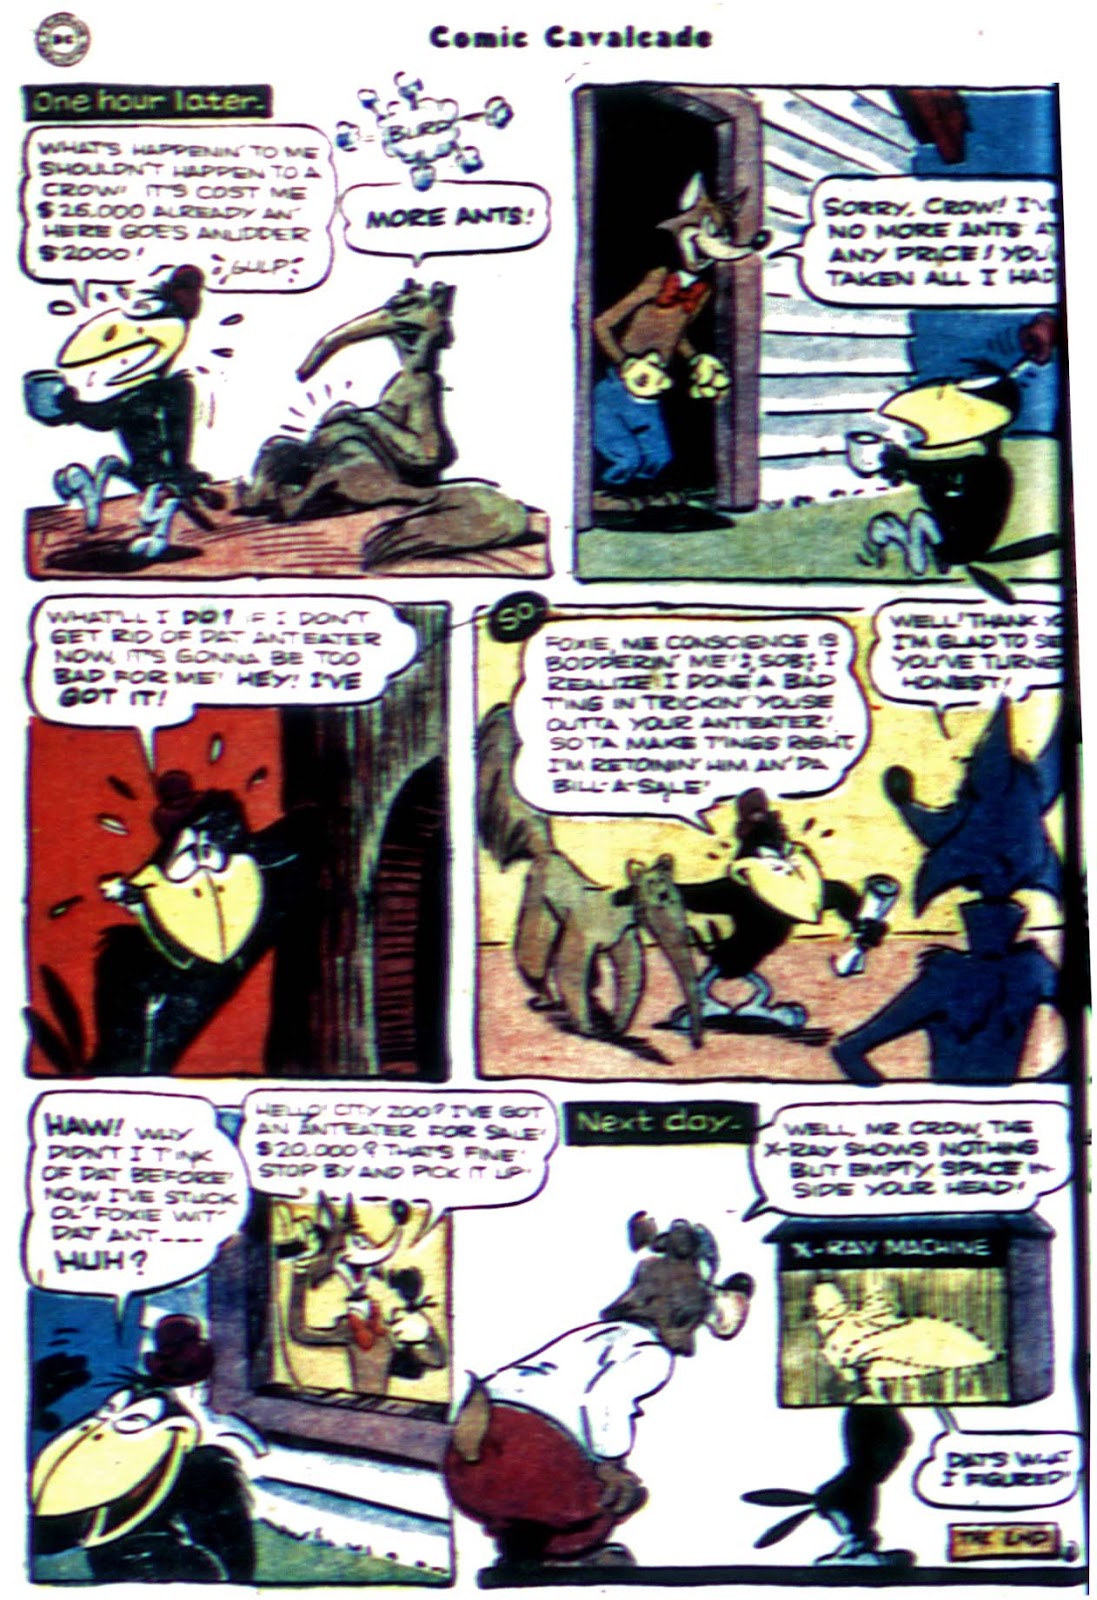 Comic Cavalcade issue 30 - Page 10